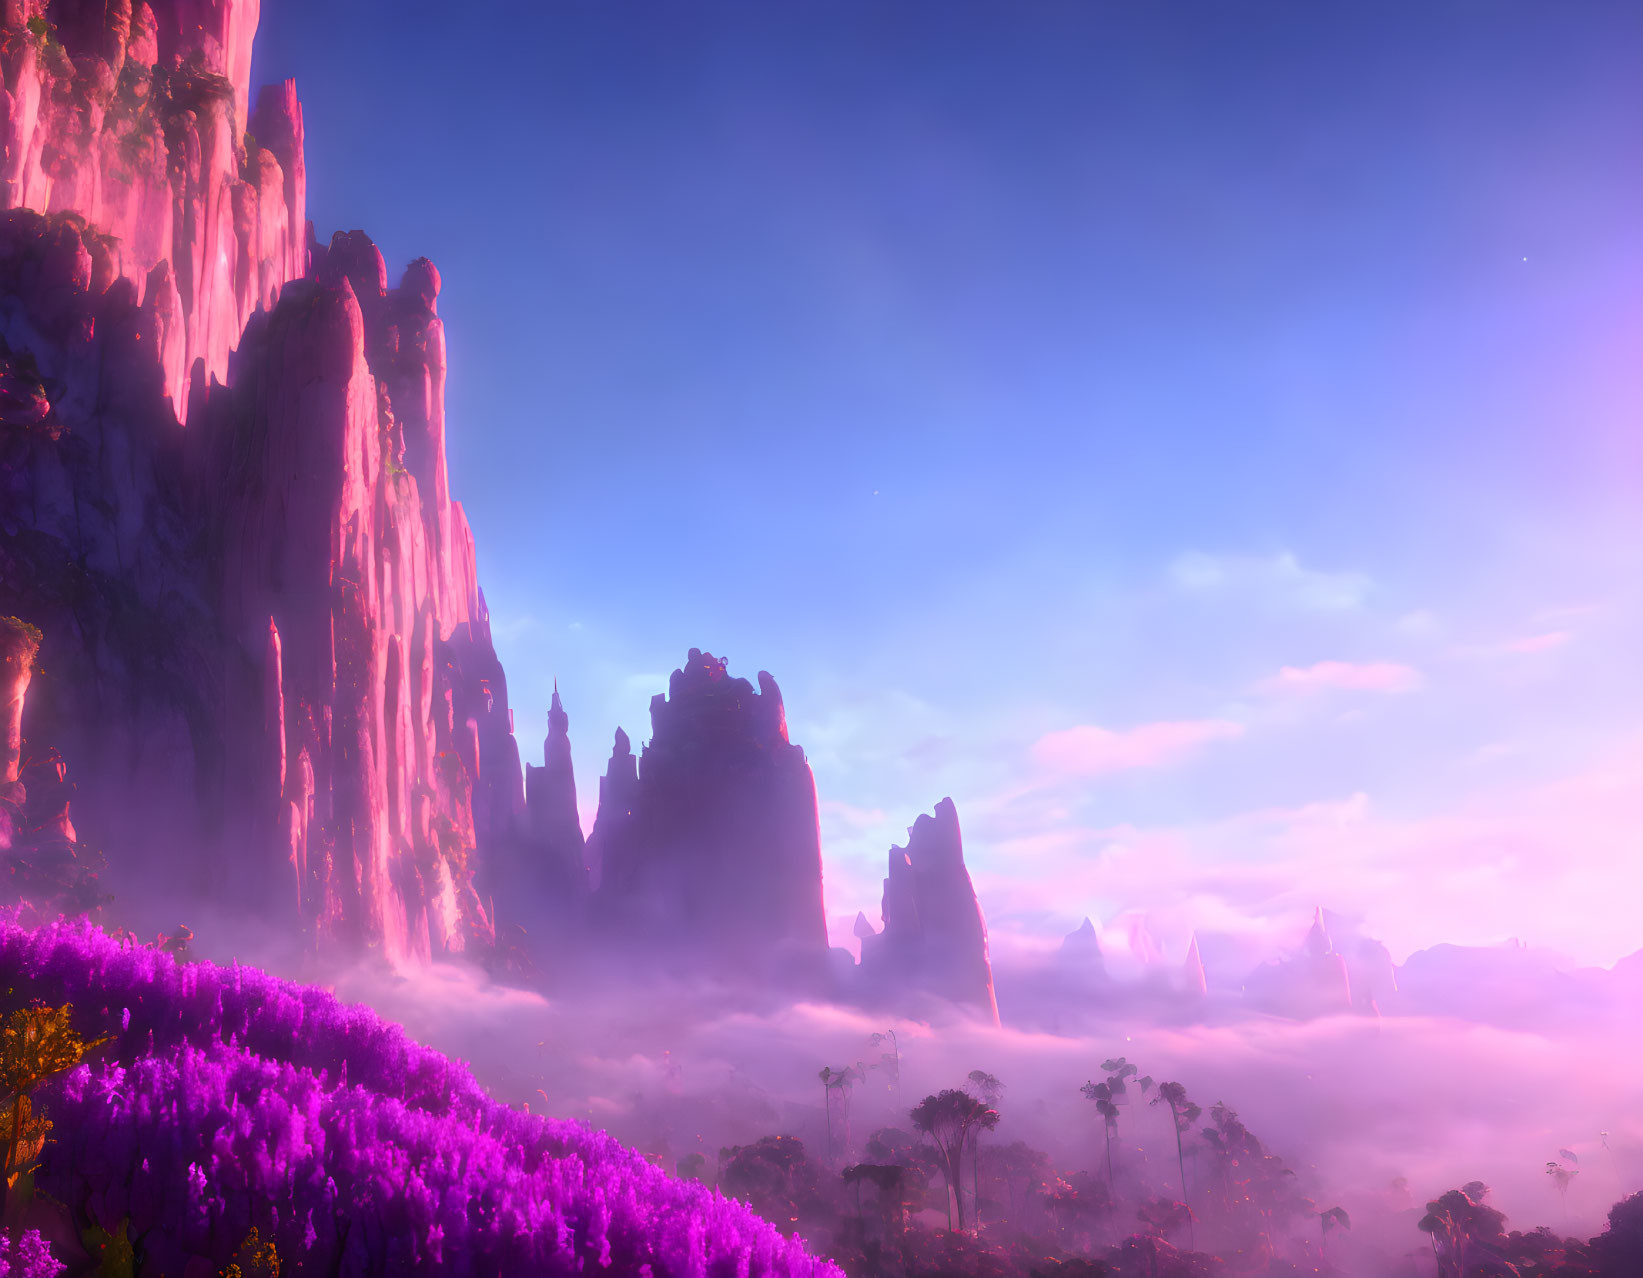 Majestic pink cliffs, purple flowers, and pastel sky in dreamy landscape